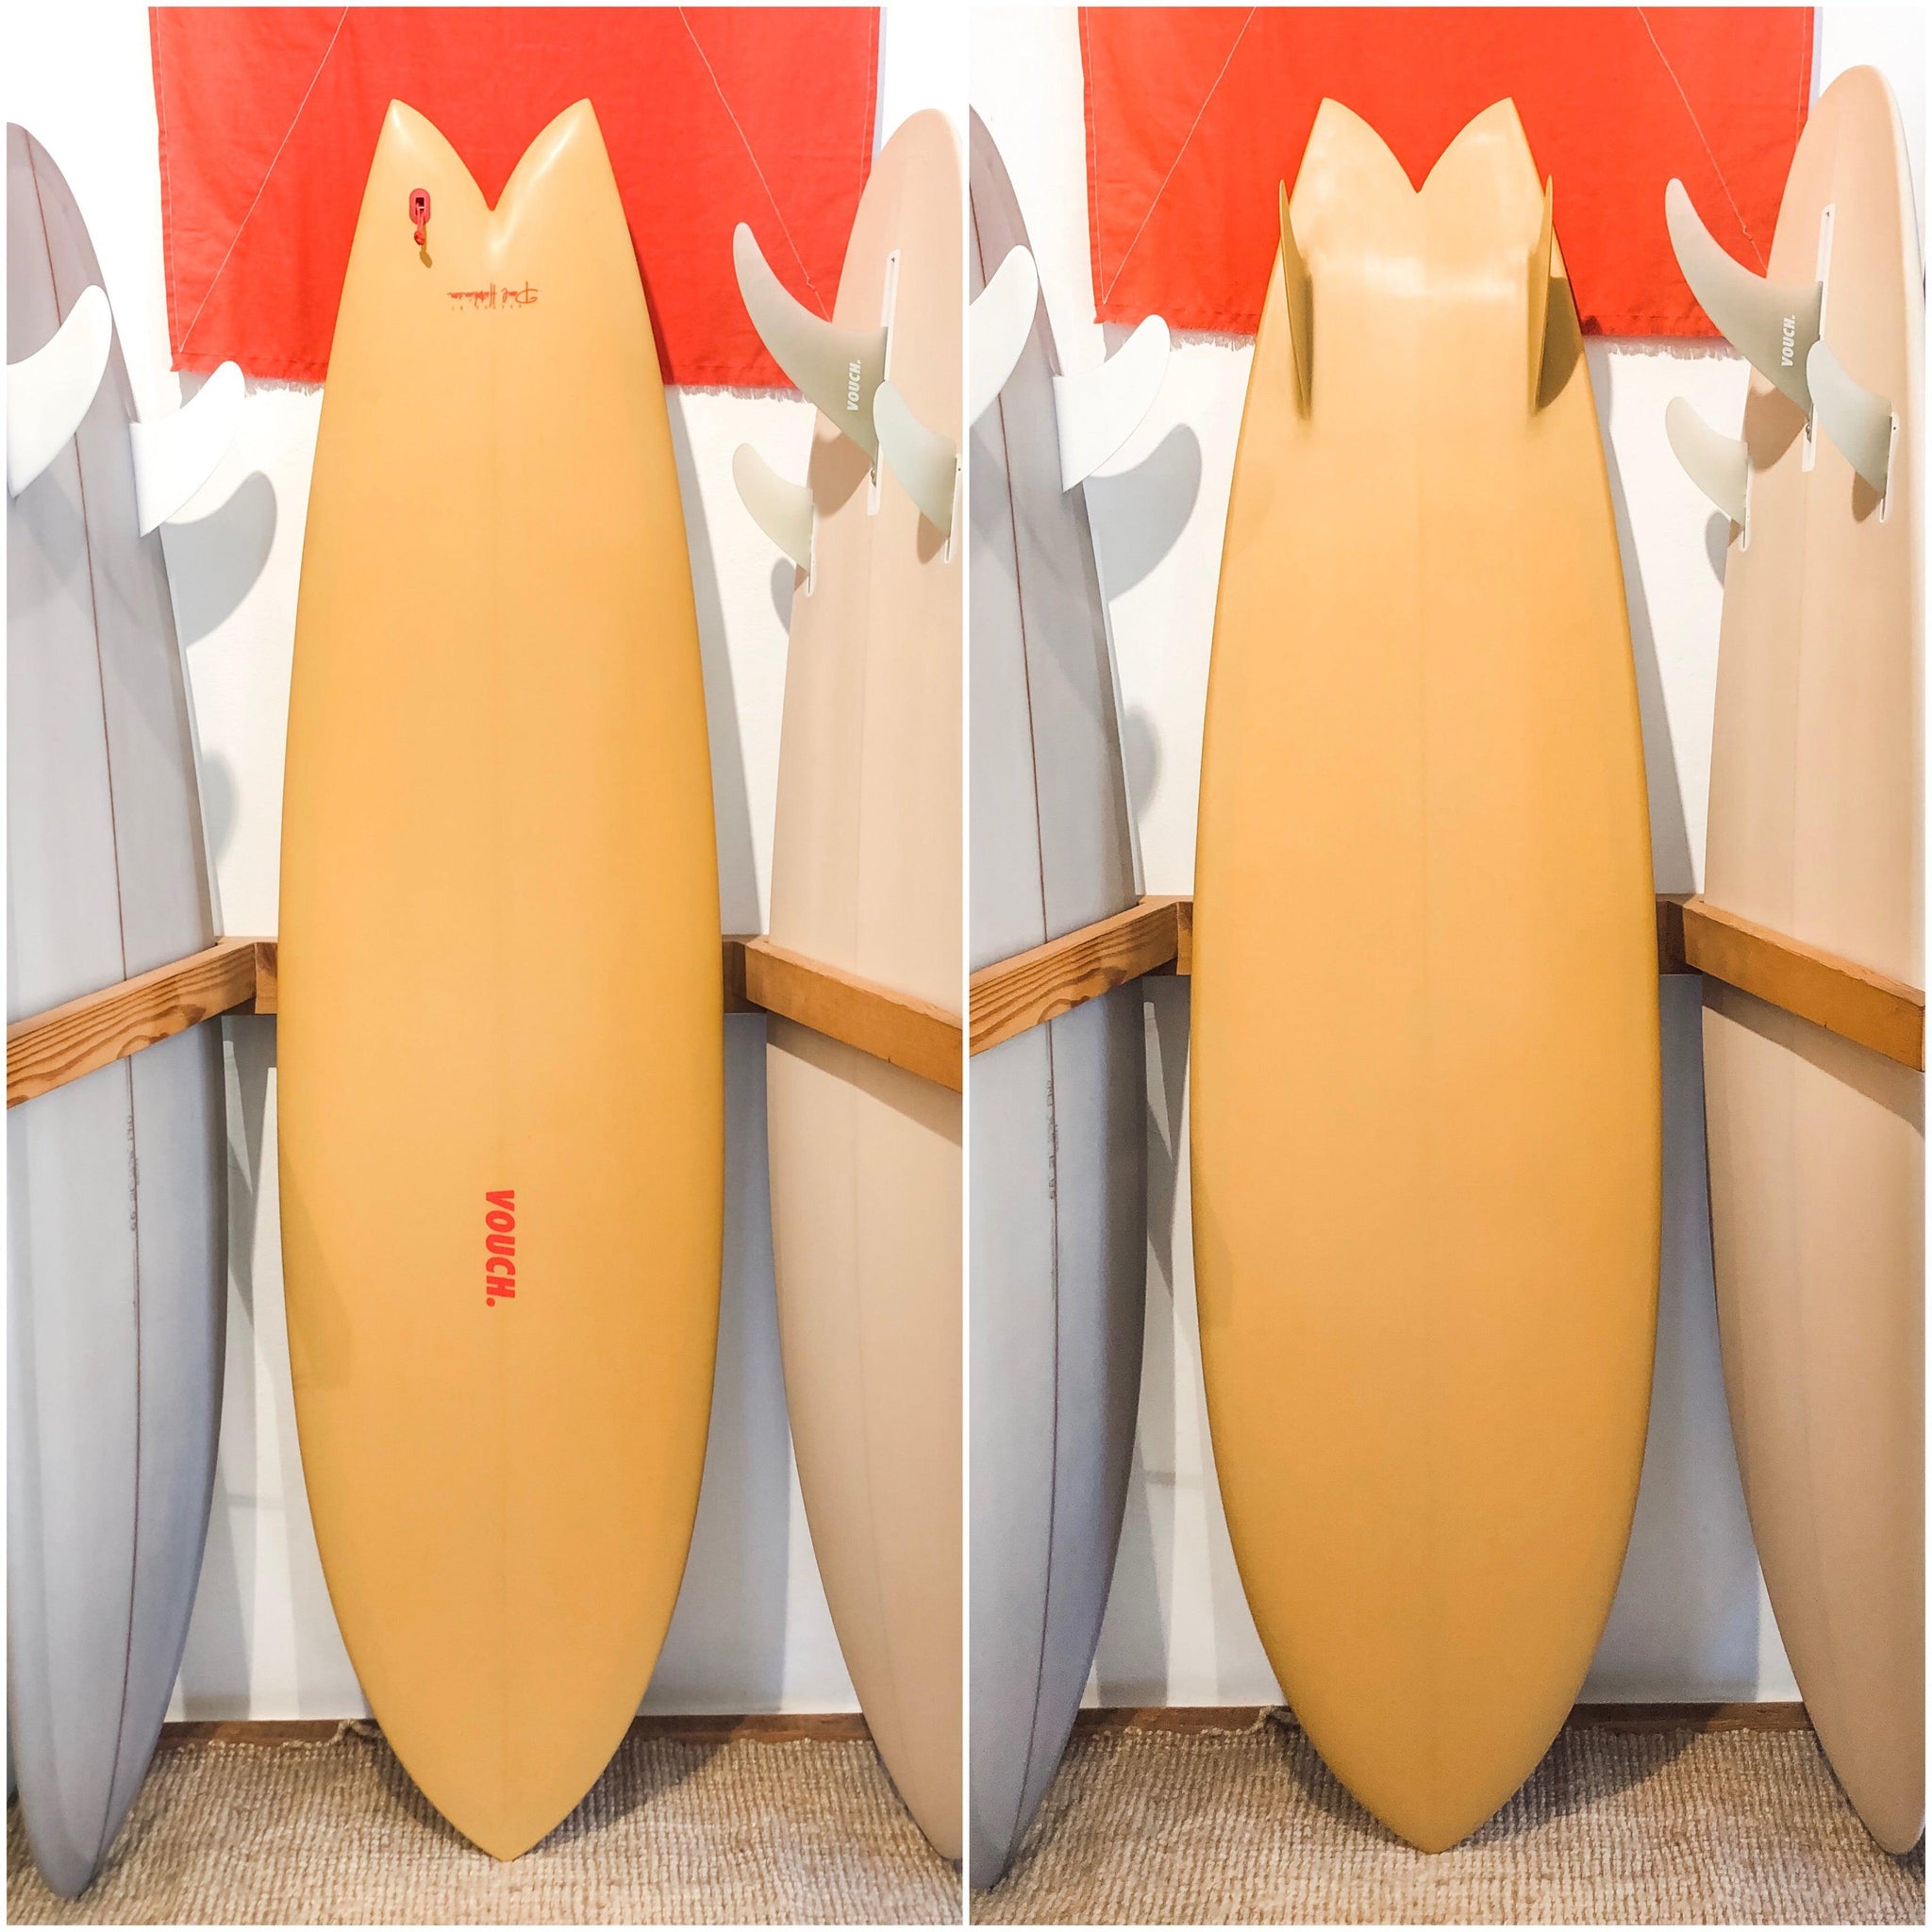 VOUCH 6'10" MID VISH ~ INCA GOLD PIGMENT-Keel Surf & Supply